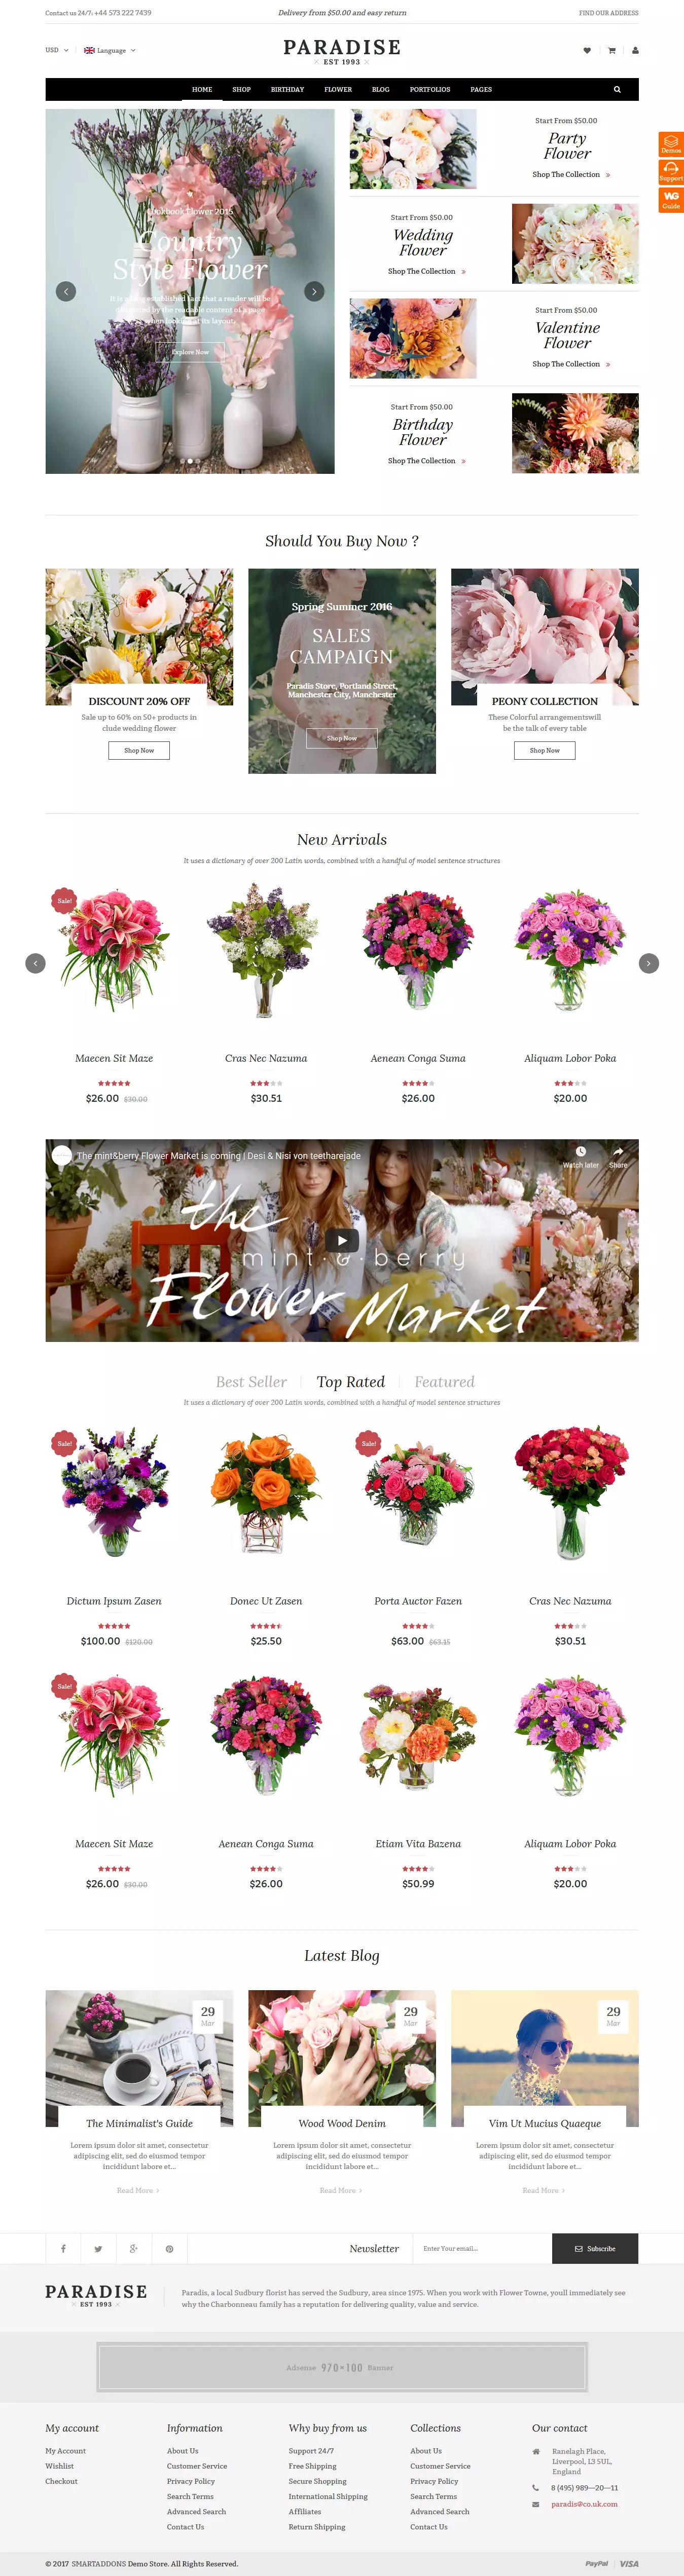 Paradise - Best Premium Florist and Floriculture WordPress Theme